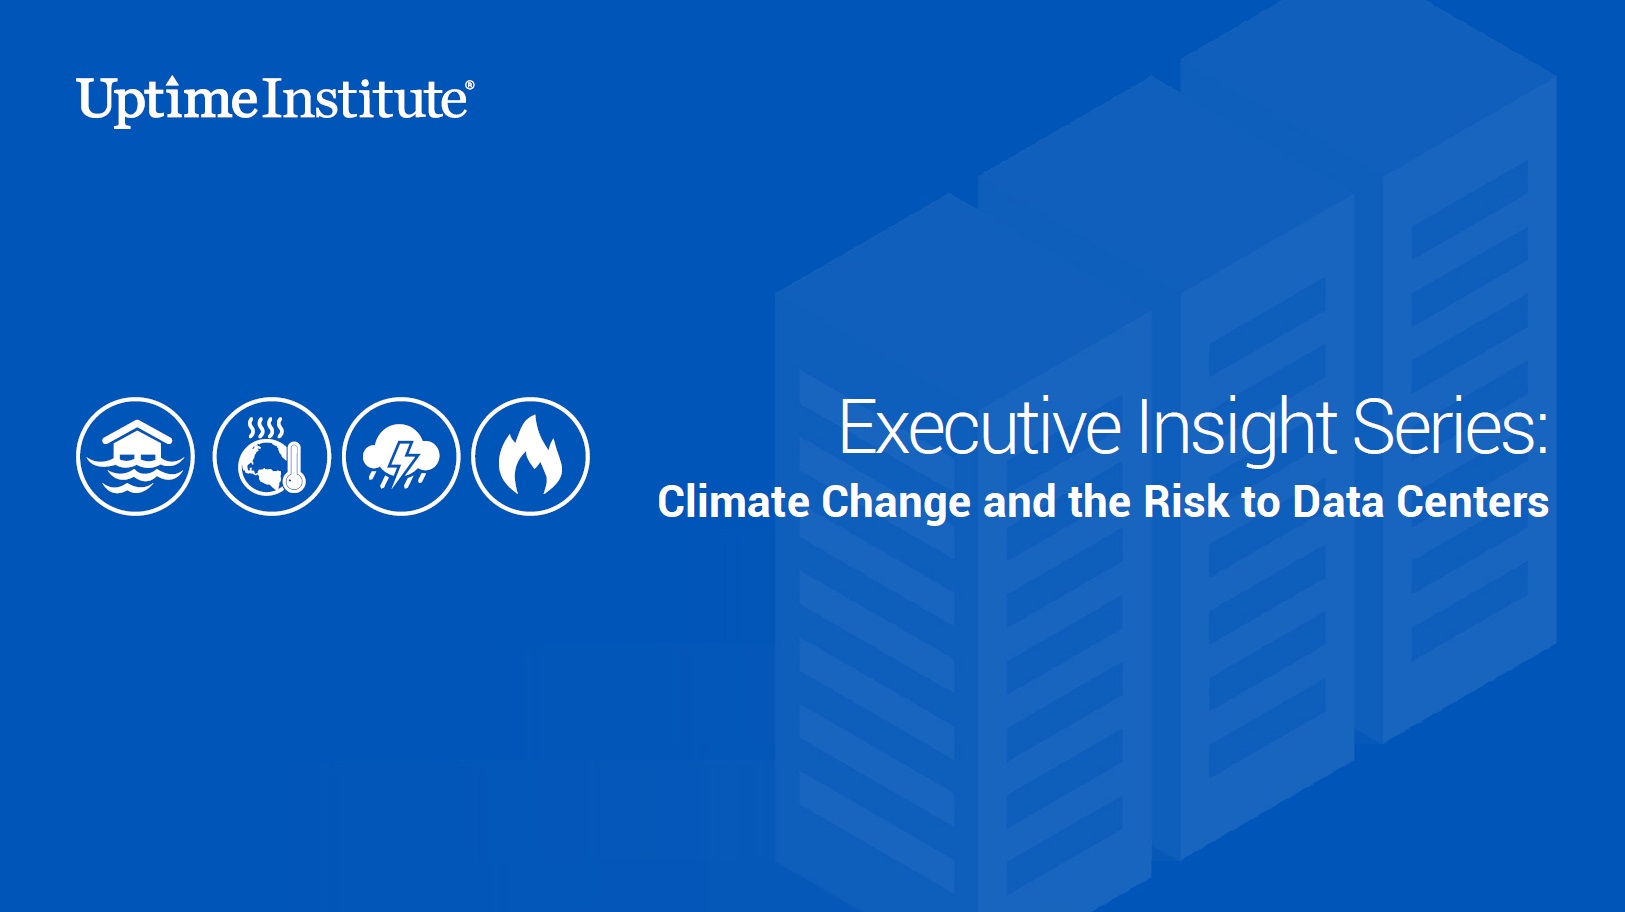 ui_executiveinsights_climatechangerisktodatacenters.jpg